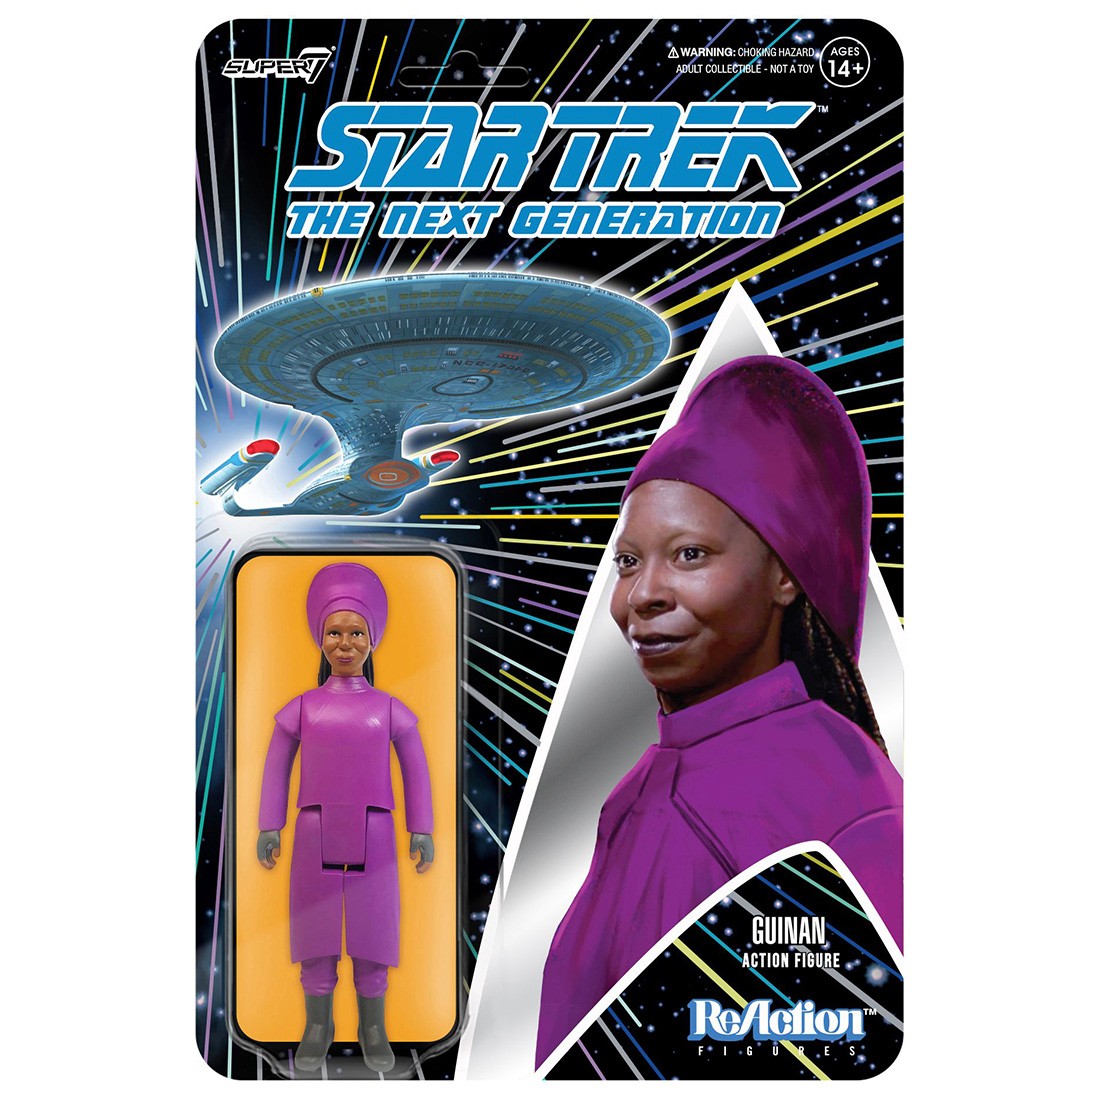 The Next Generation ReAction Figure Guinan Star Trek 